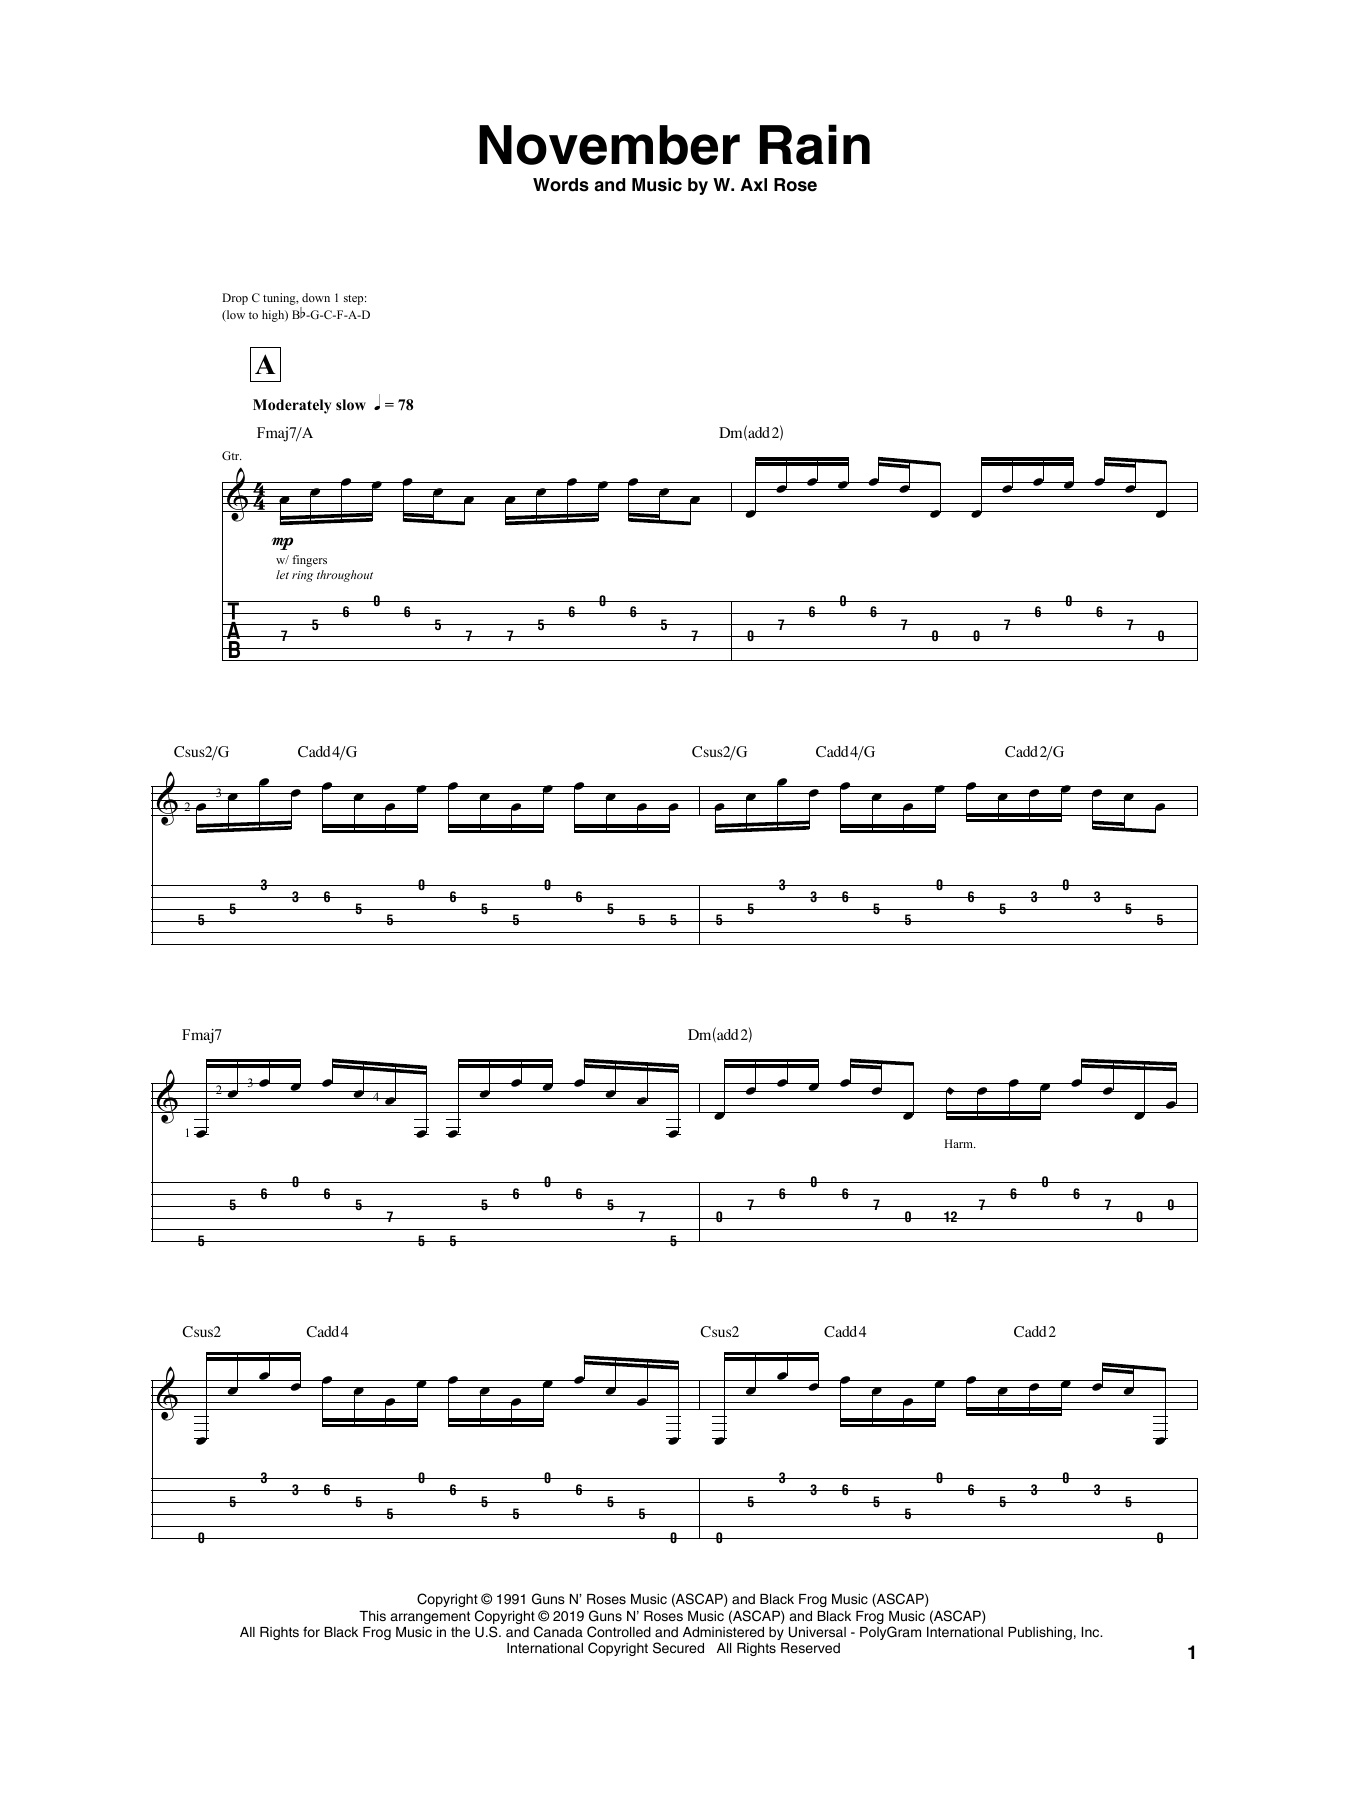 Igor Presnyakov November Rain Sheet Music Notes & Chords for Guitar Tab - Download or Print PDF